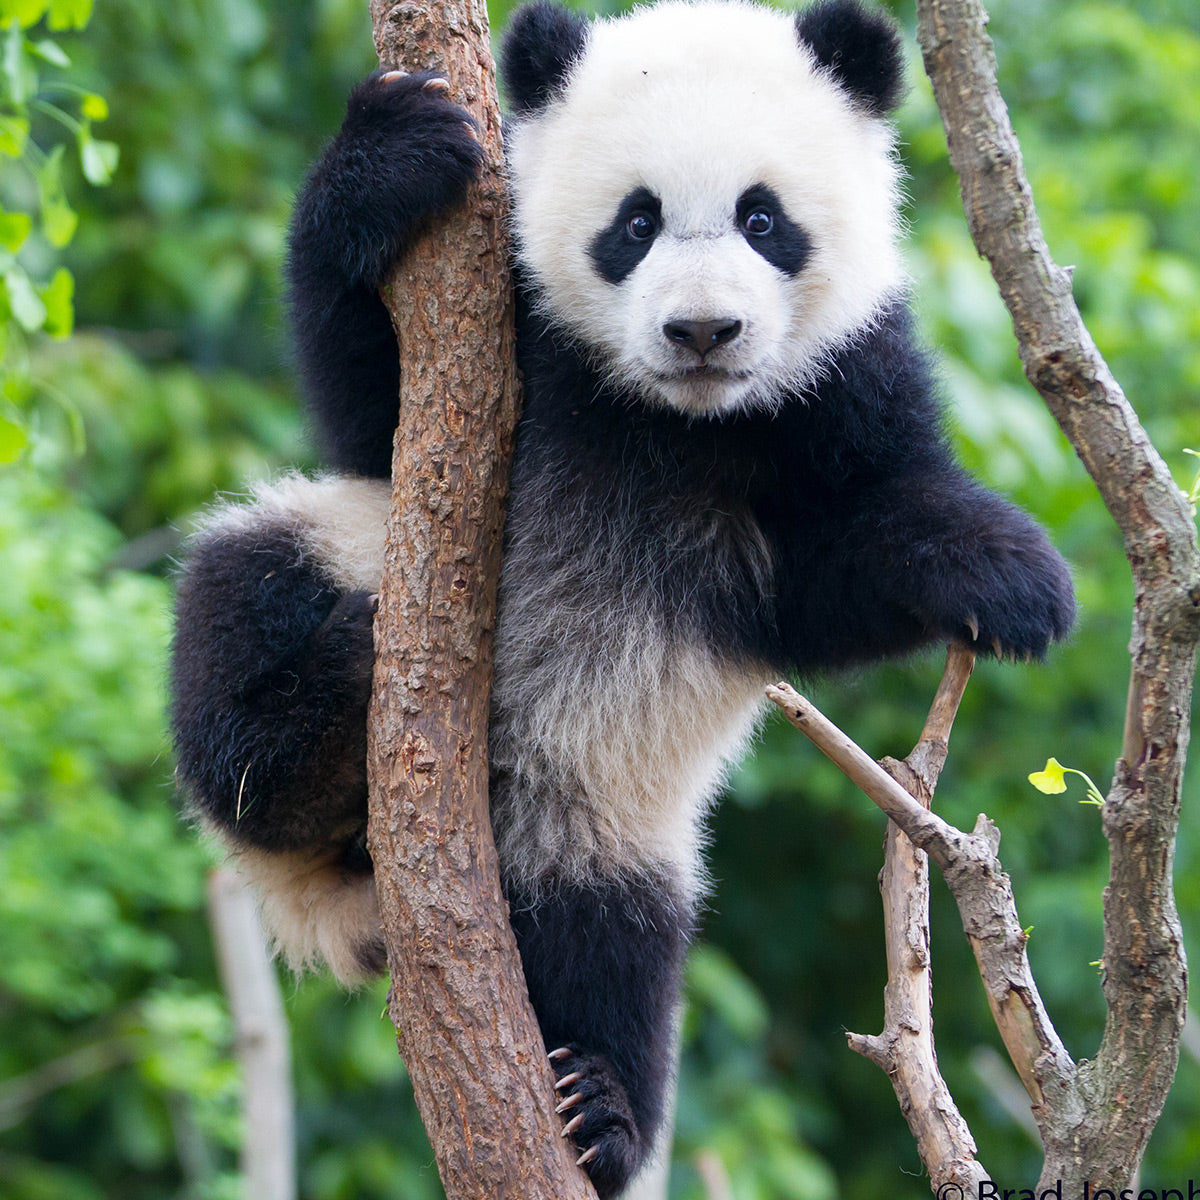 A photo of a young giant panda climbing a tree